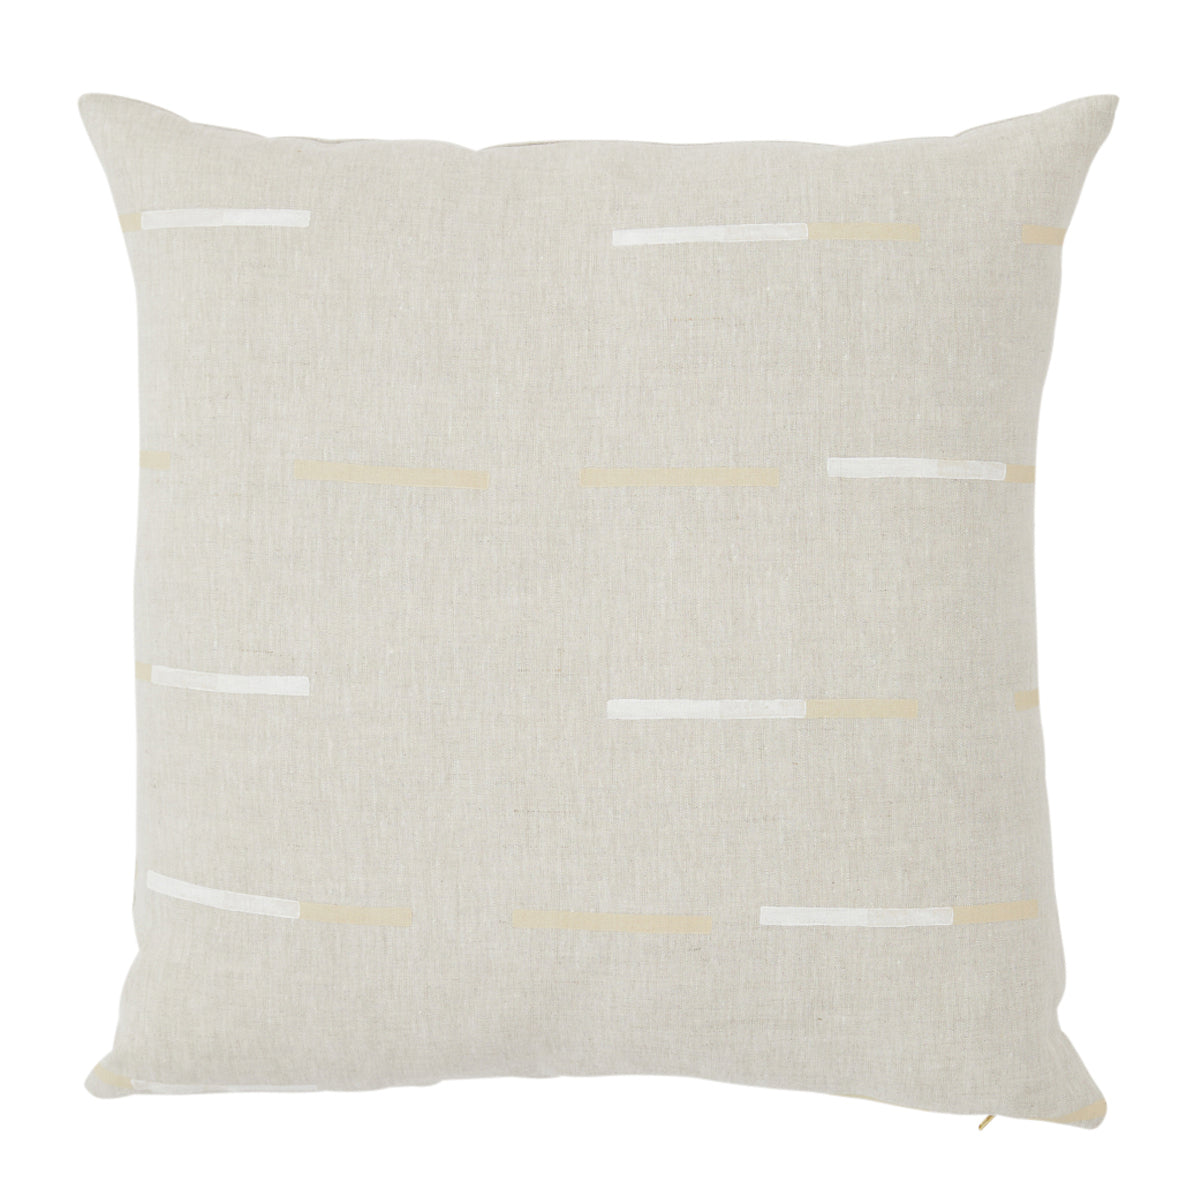 Purchase So0002206 | Overlapping Dashes Pillow, Buff - Schumacher Pillows